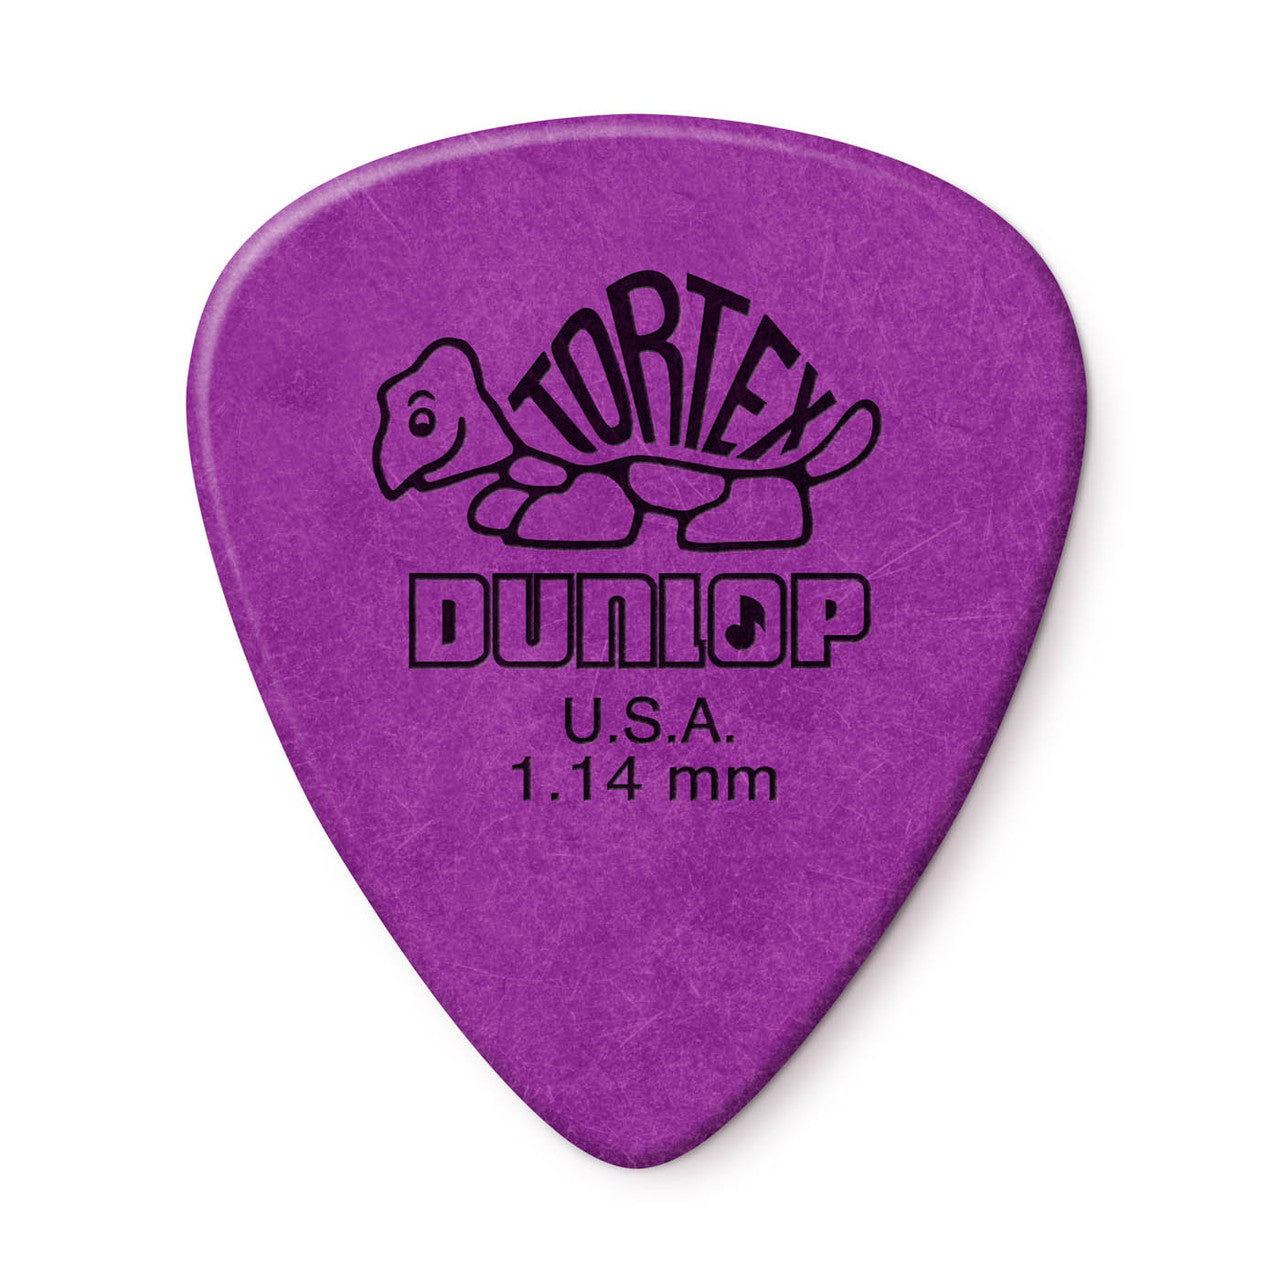 Dunlop Tortex Standard pick, assorted thicknesses